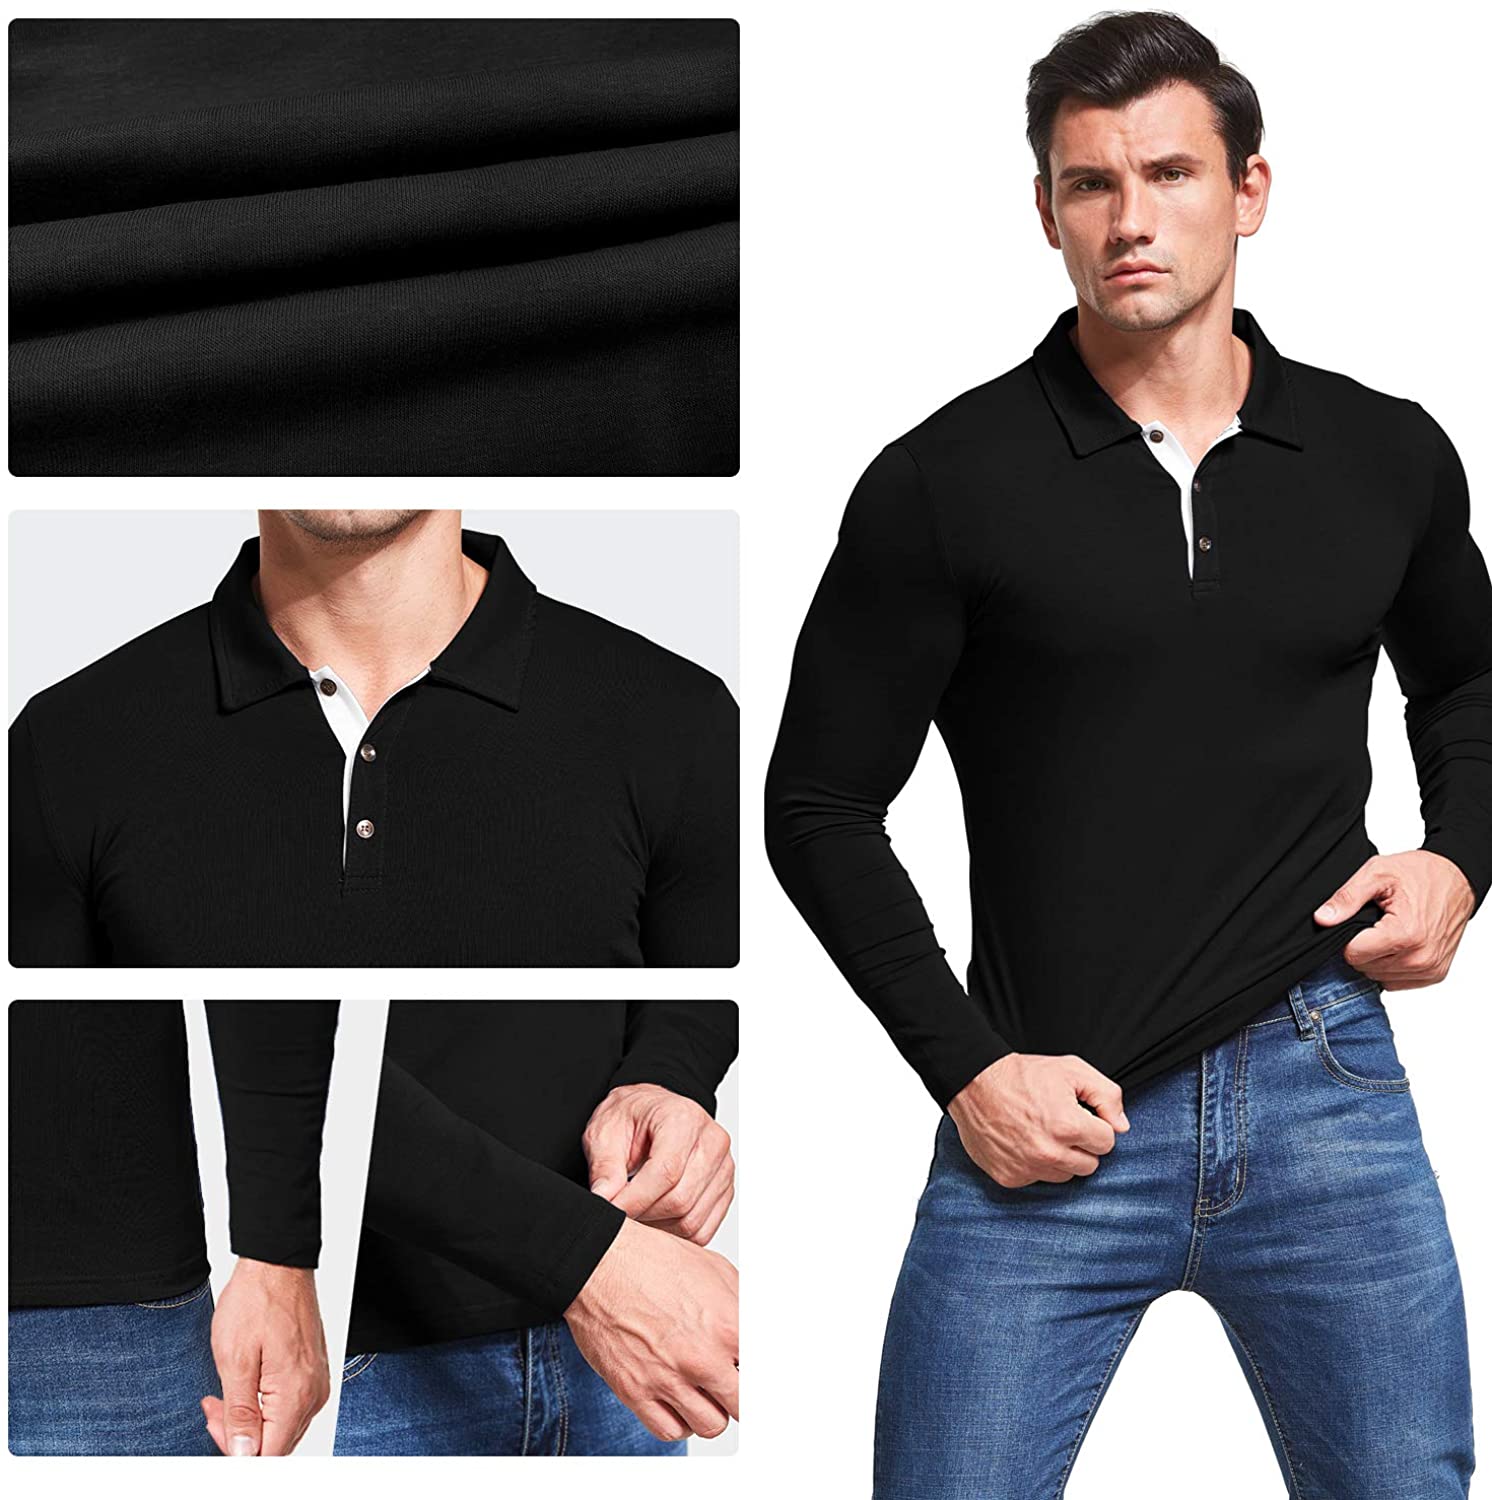 Aiyino Men's Long Sleeve Polo Shirts Casual Slim Fit Basic Designed Cotton Shirts - image 2 of 3